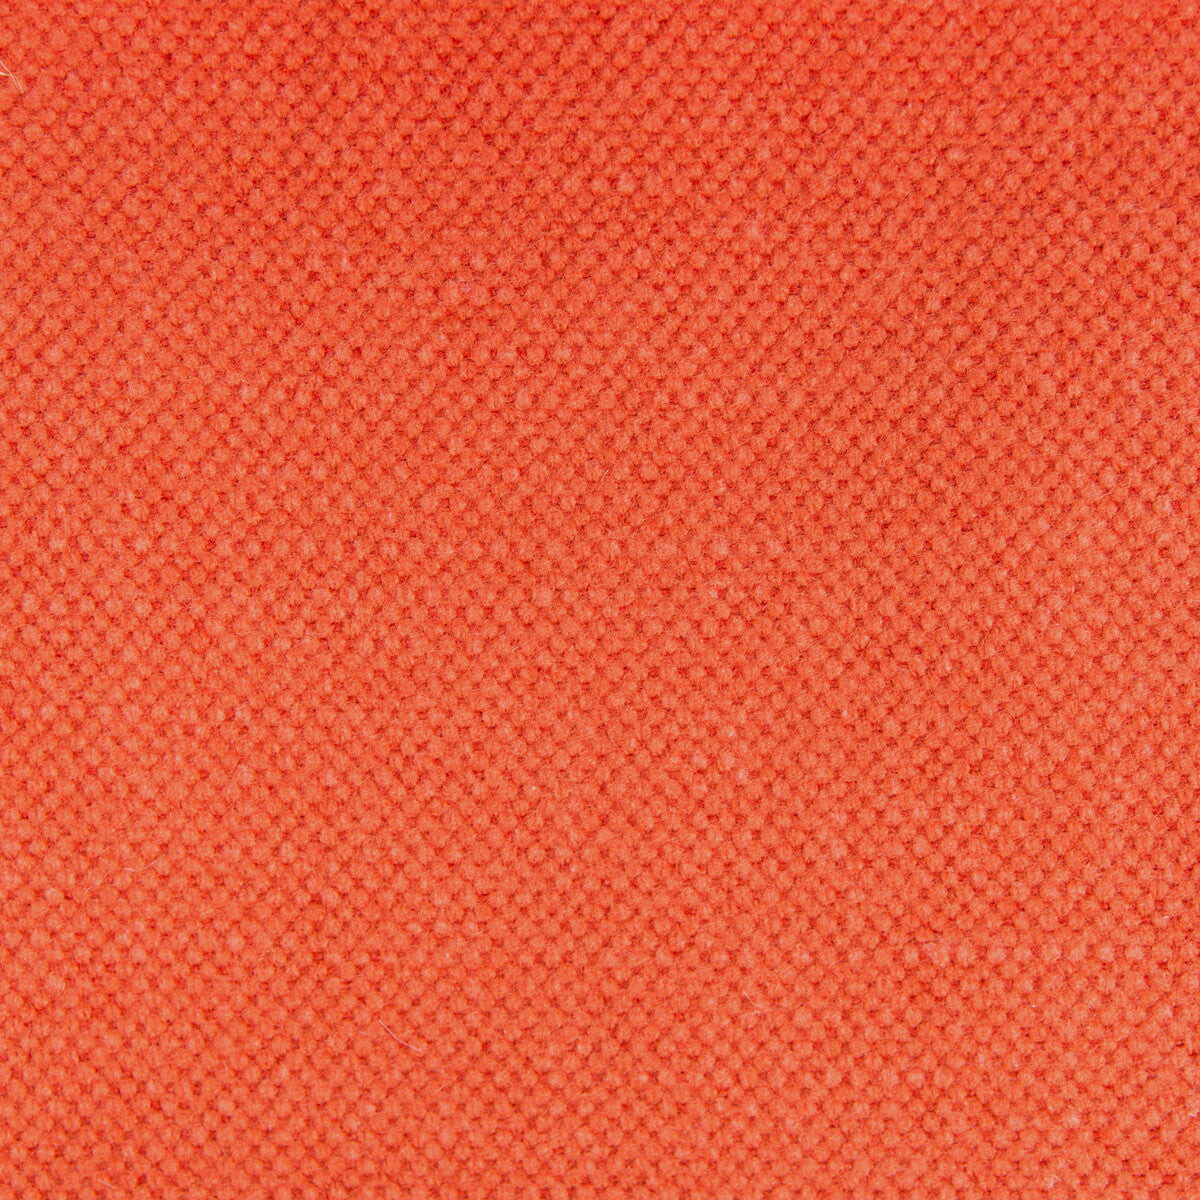 Lima fabric in mango color - pattern GDT5616.014.0 - by Gaston y Daniela in the Gaston Nuevo Mundo collection